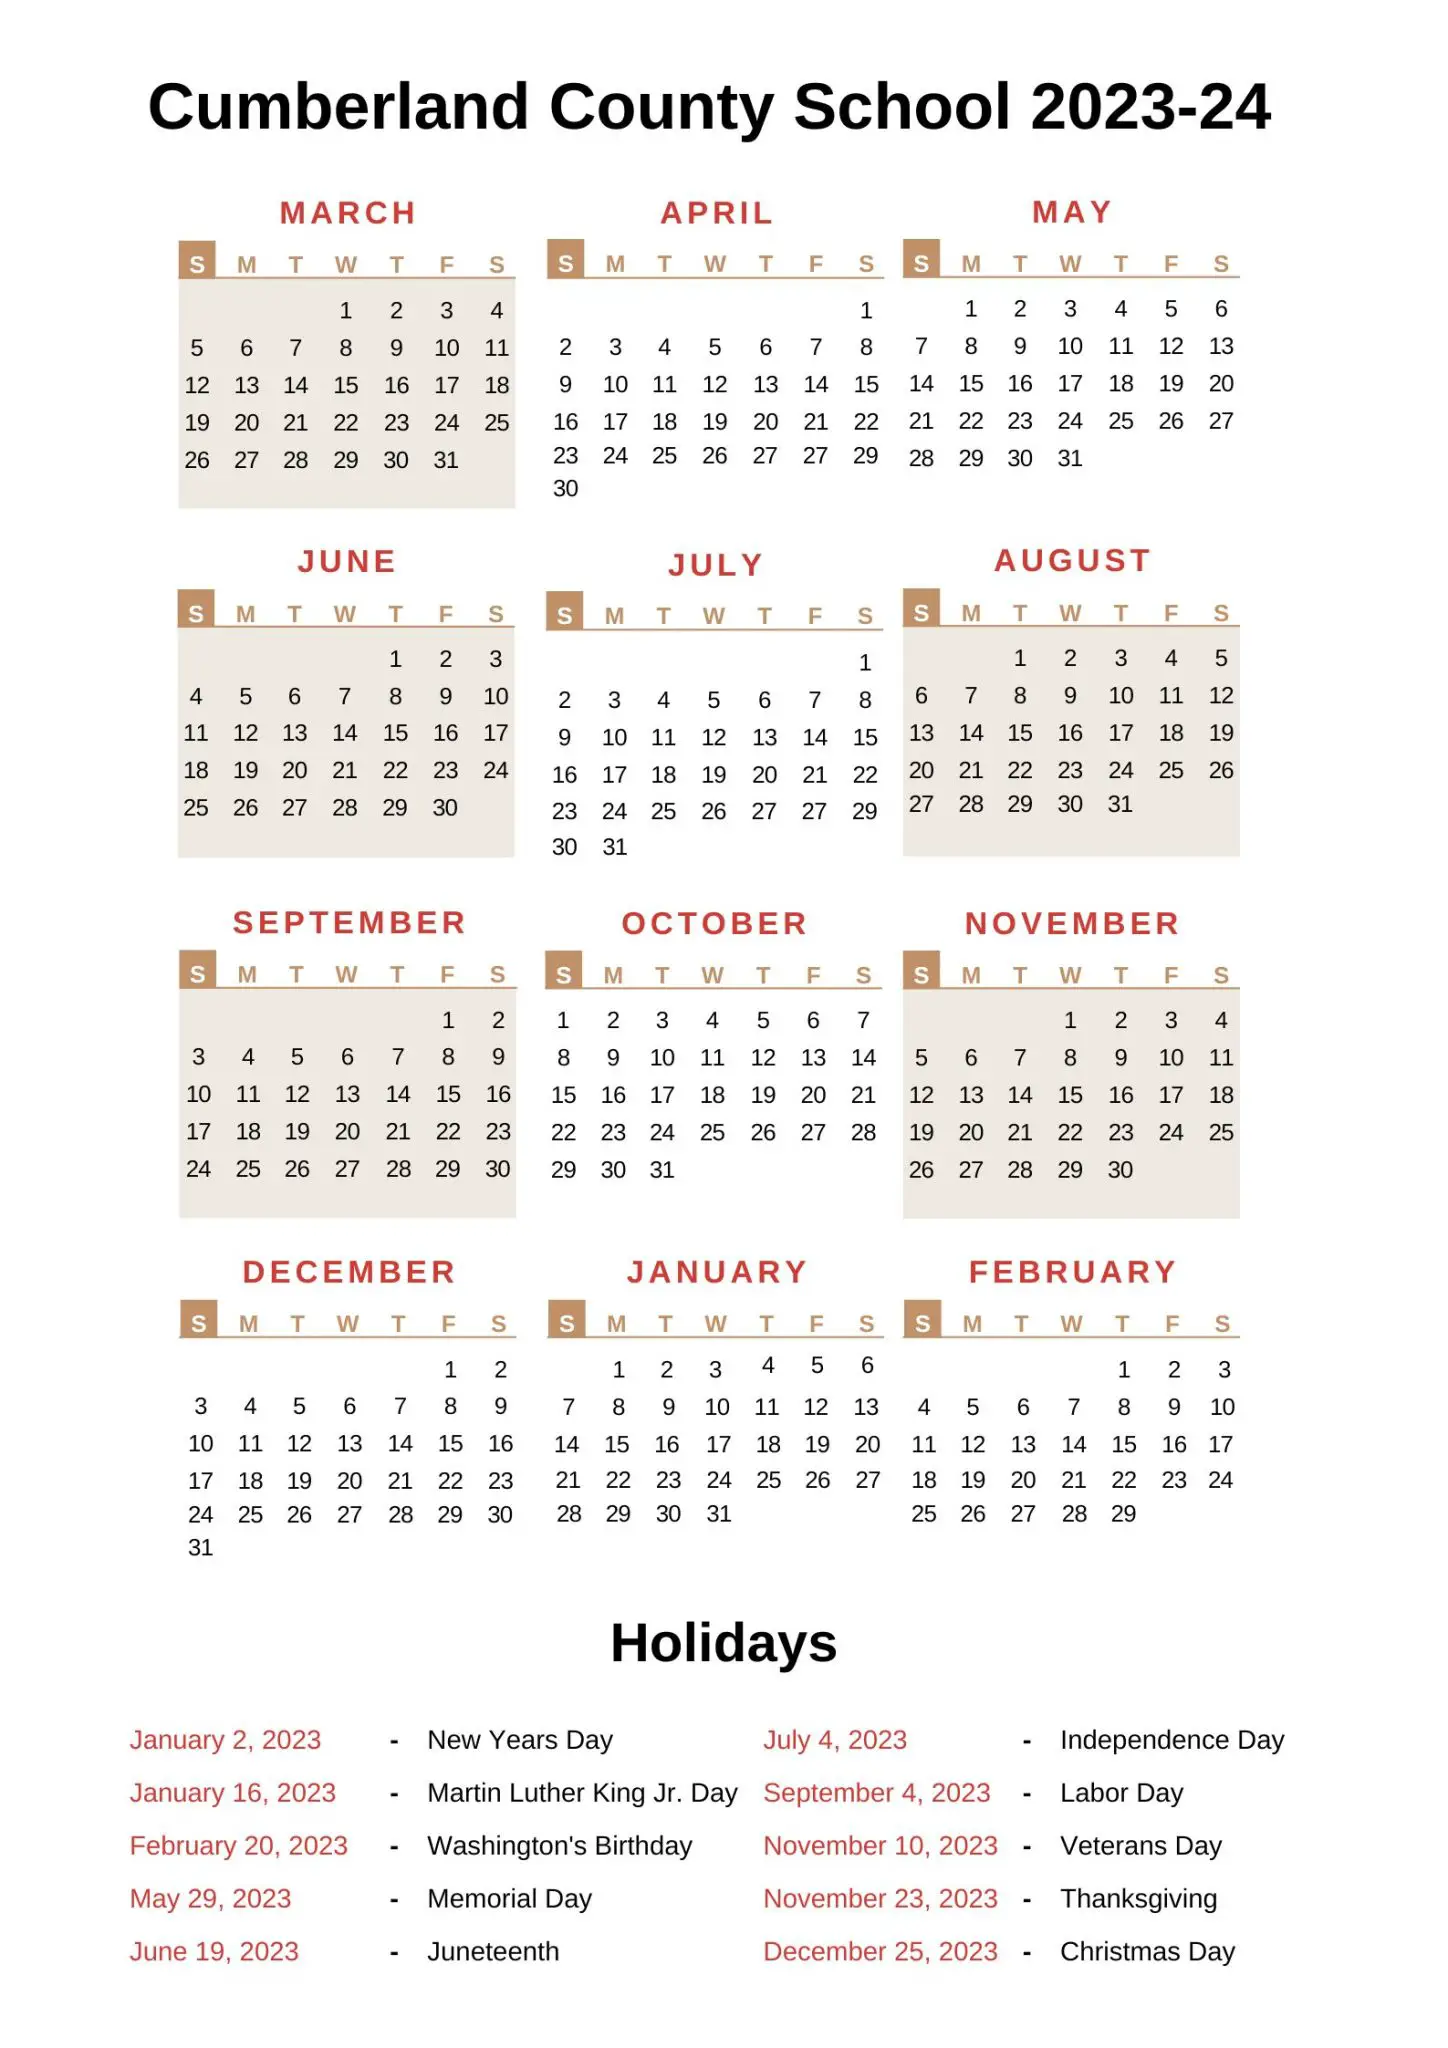 Cumberland County Schools Calendar 2023-24 With Holidays